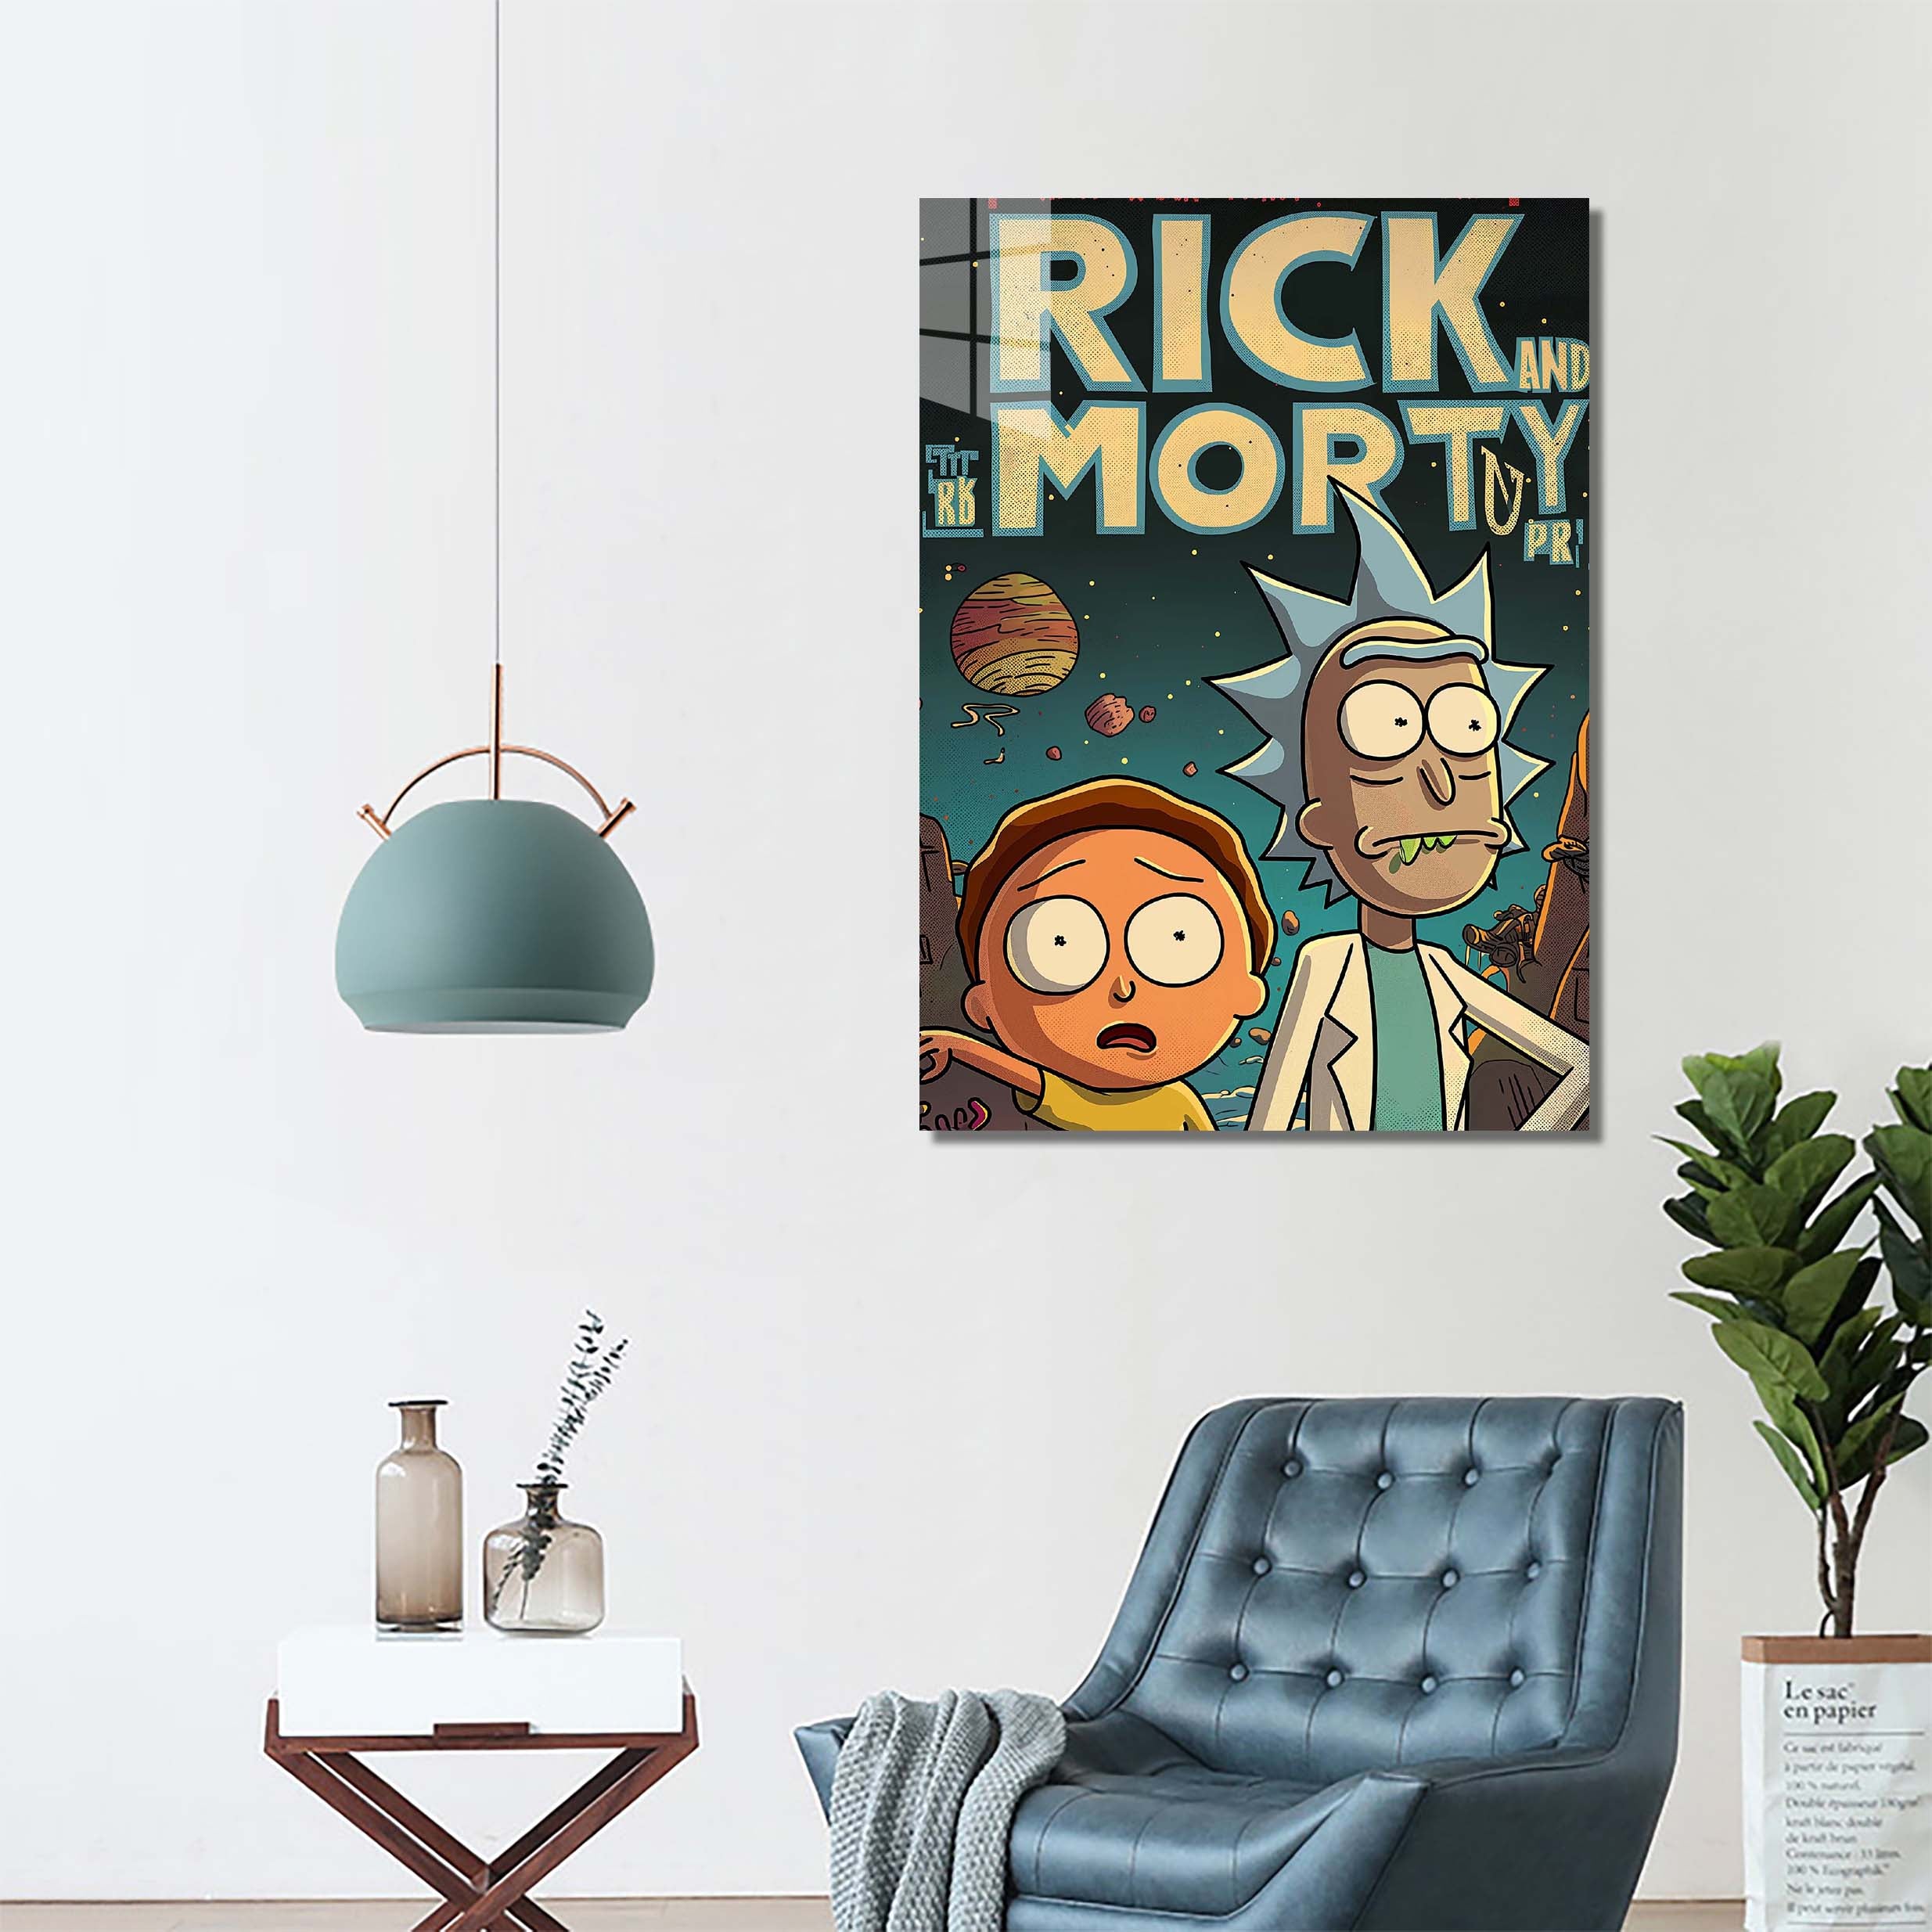 Rick and Morty-designed by @LilSevenSketcher